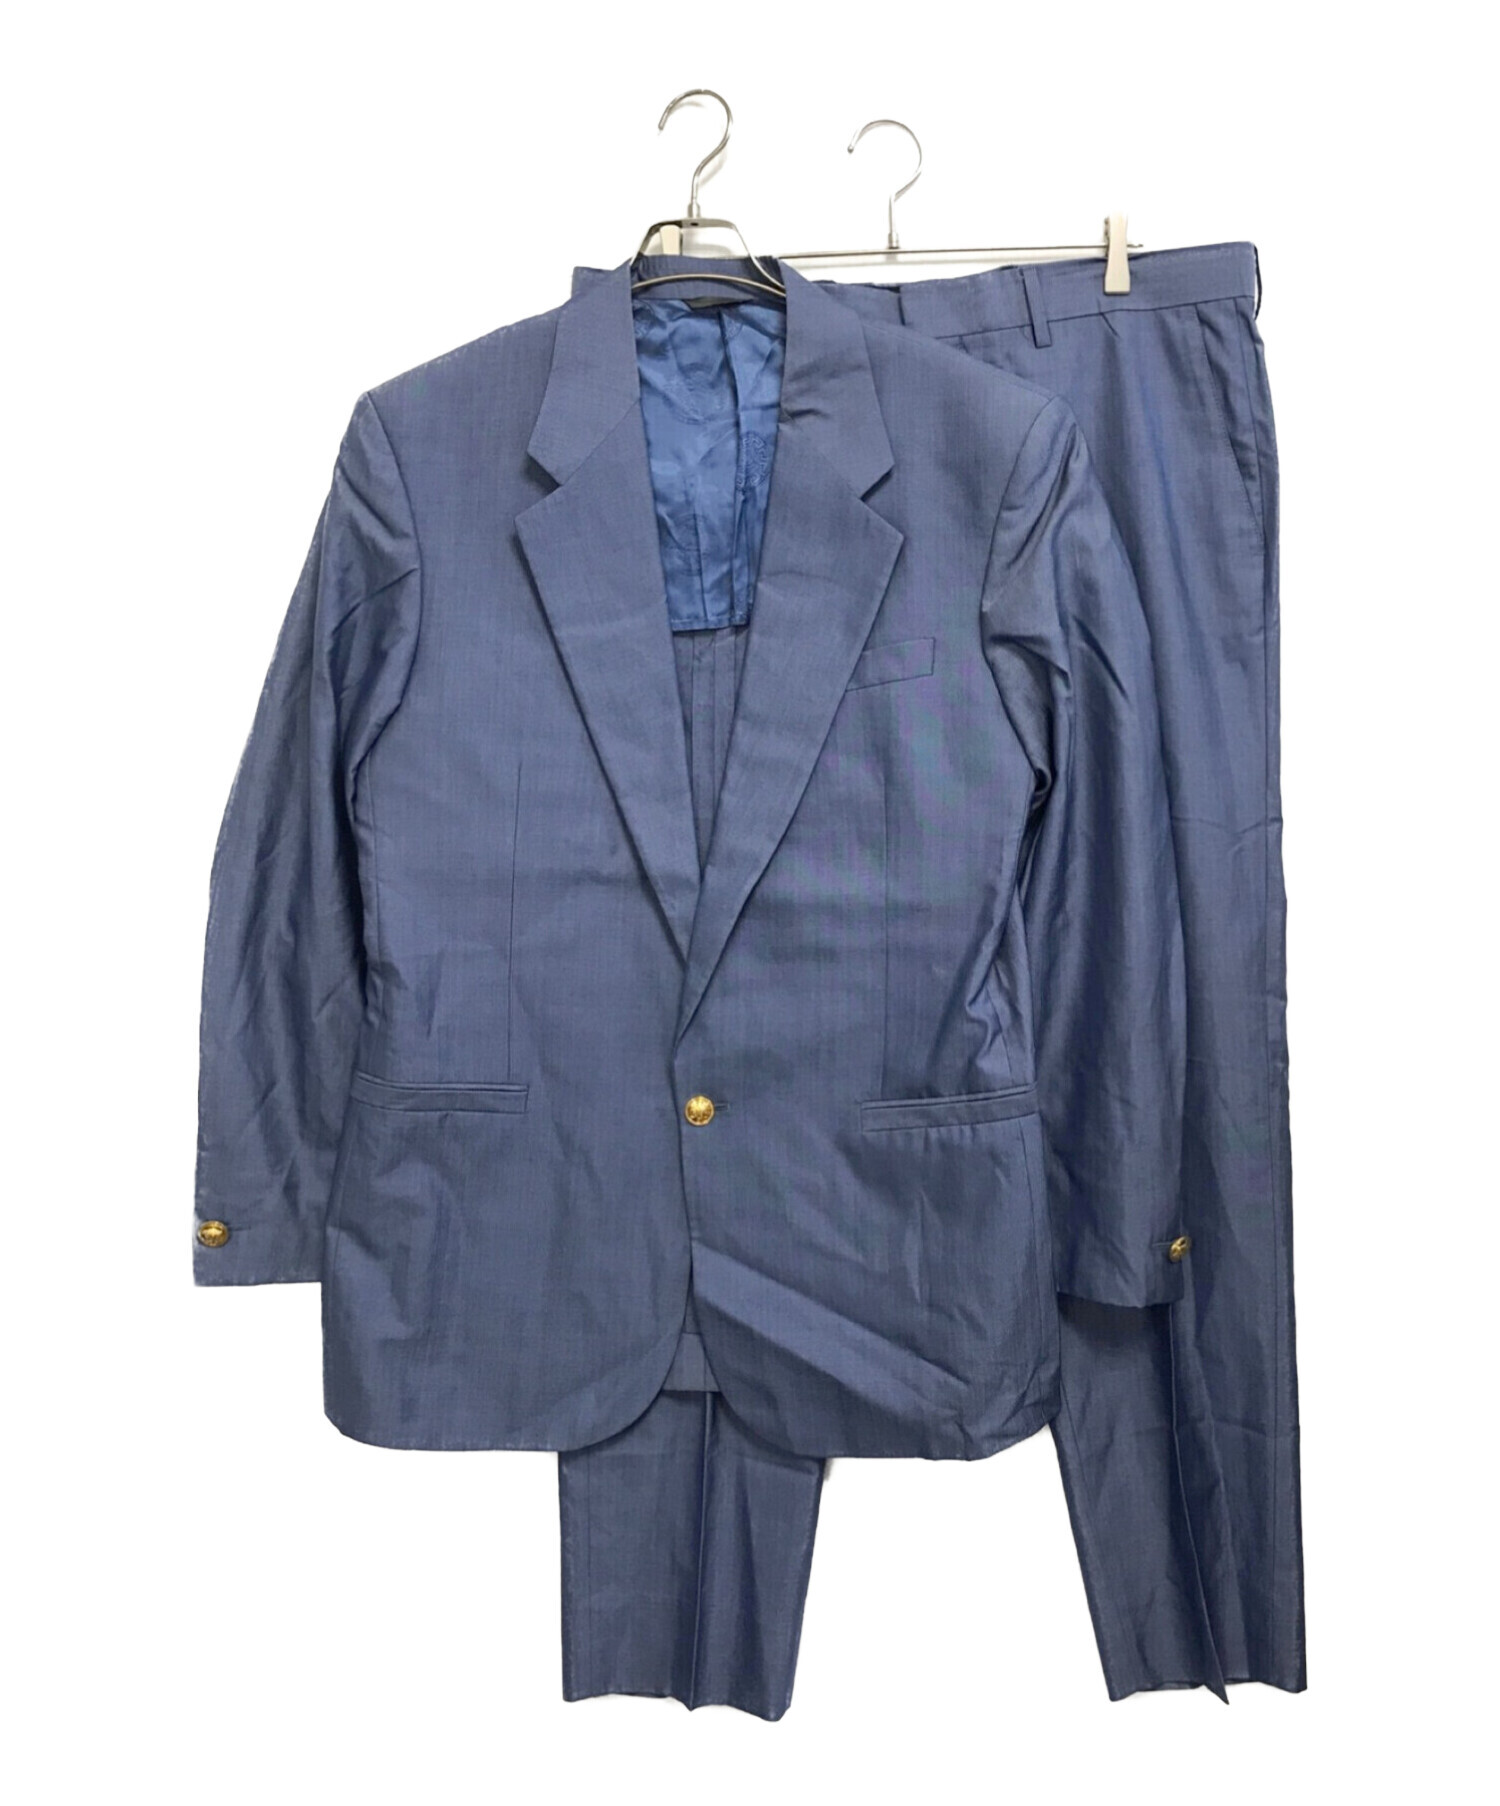 VERSACE (ヴェルサーチェ) メデューサボタンセットアップスーツ ブルー サイズ:52